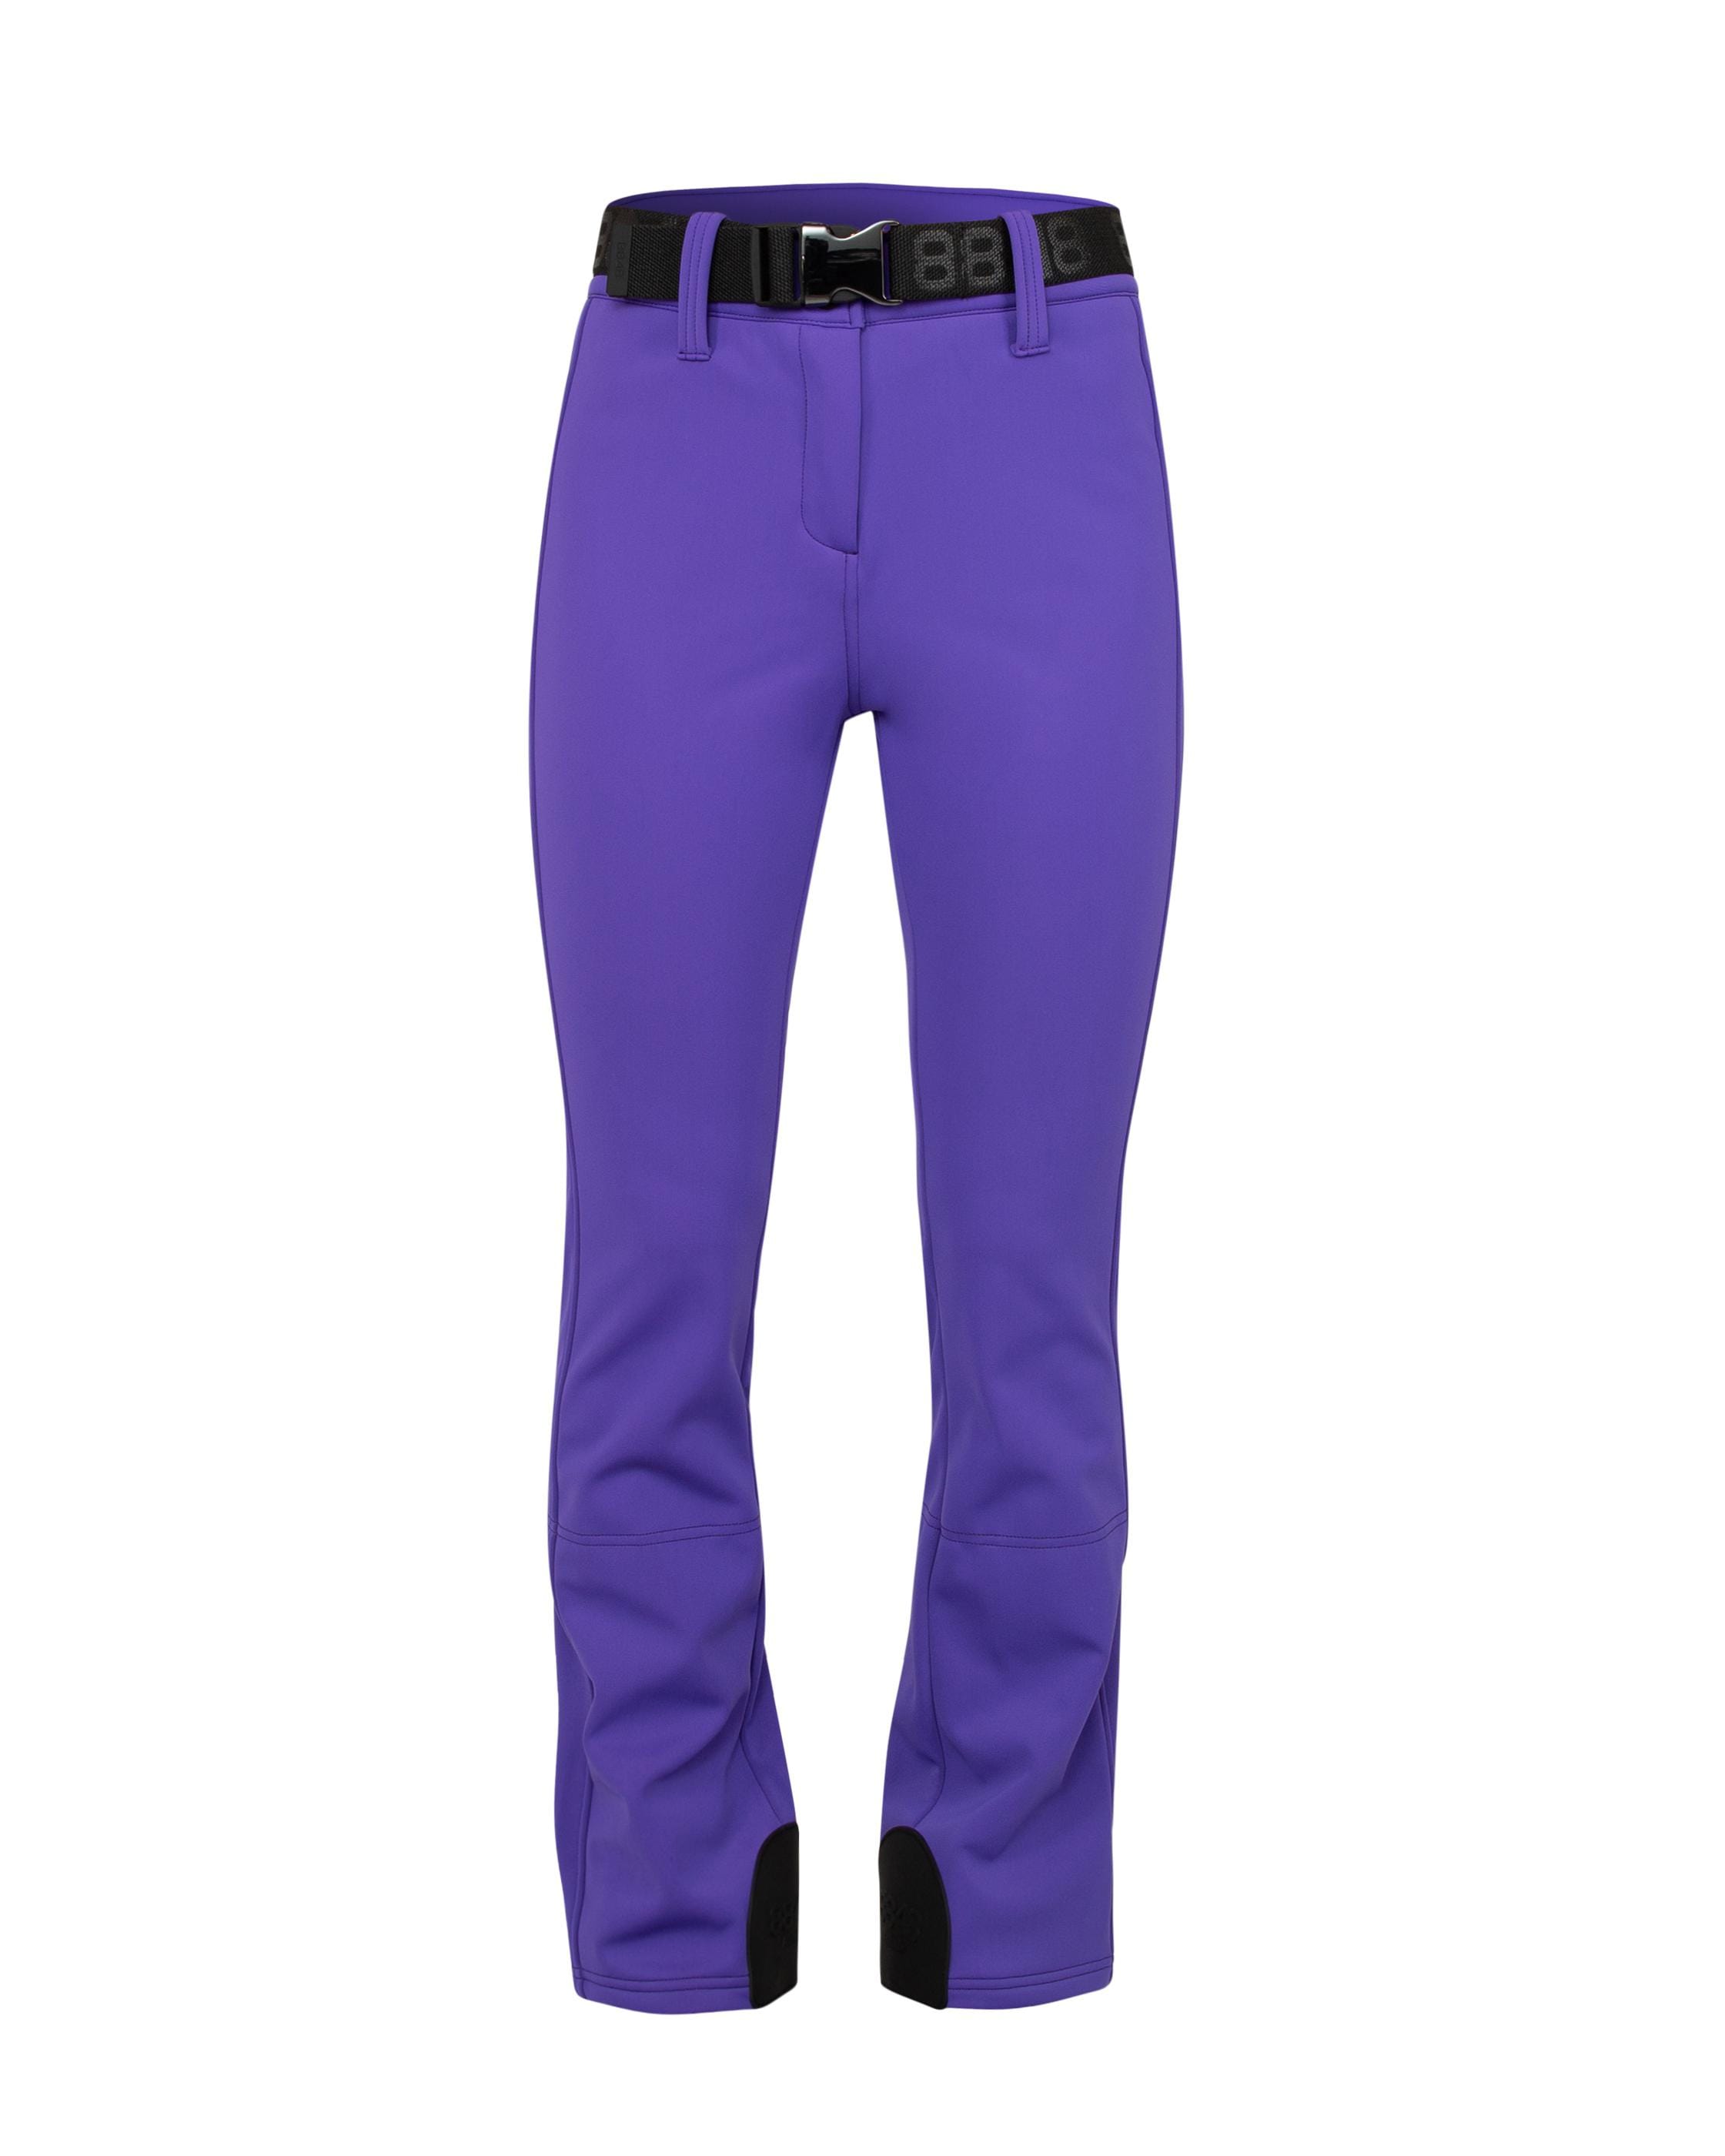 Tumblr W Pant Purple - Lila skihose Damen slim fit